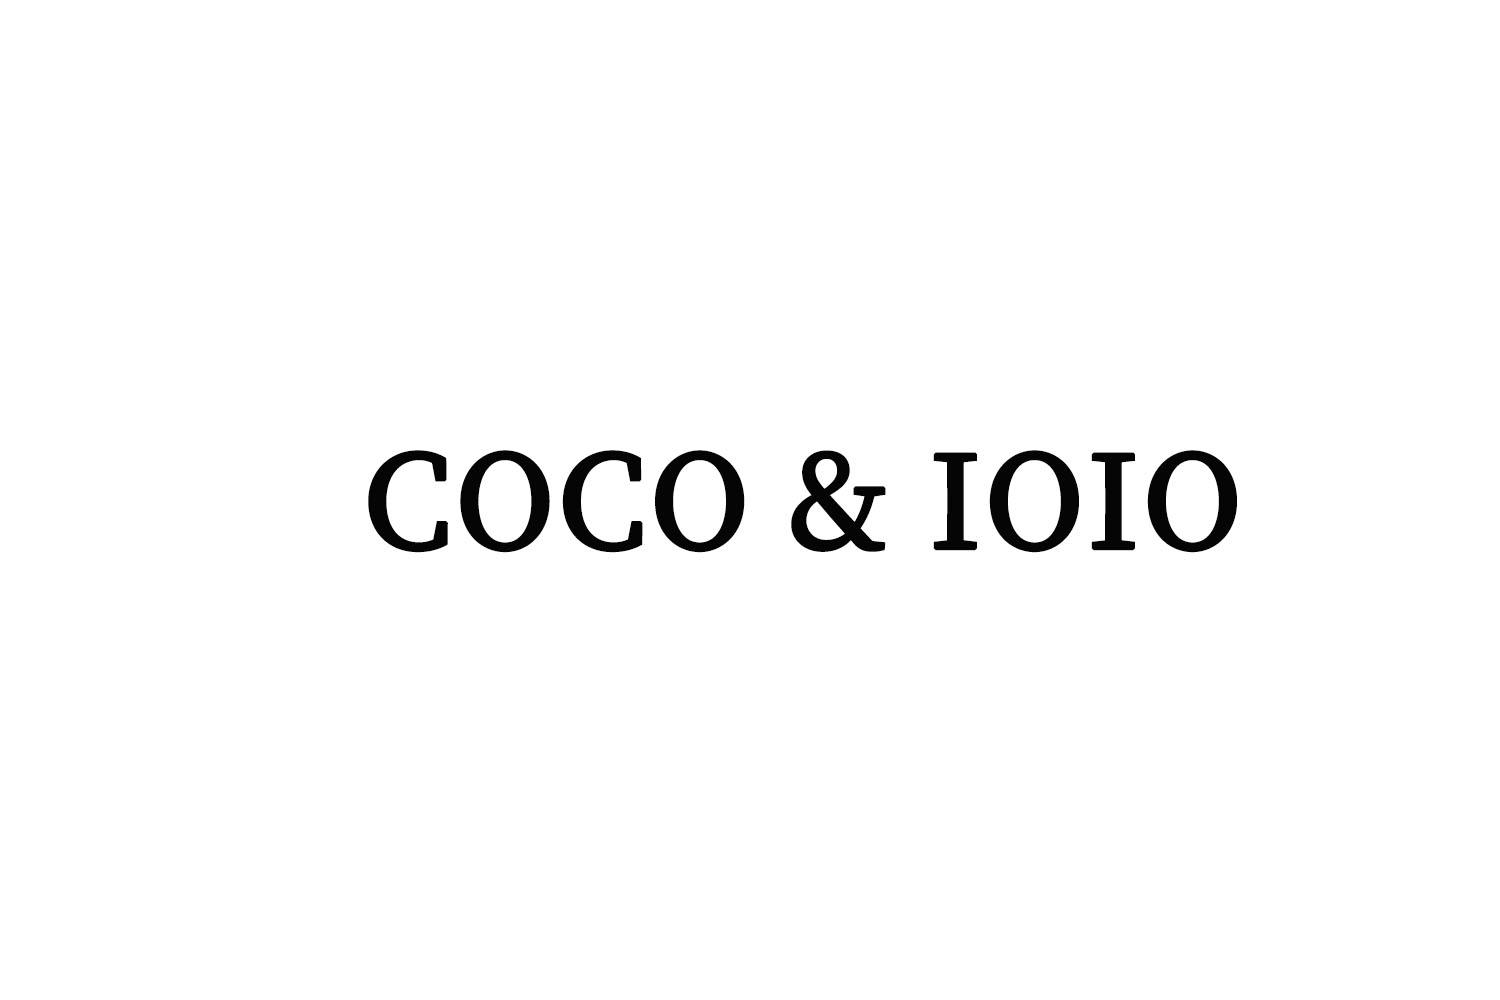 18类-箱包皮具COCO&IOIO商标转让